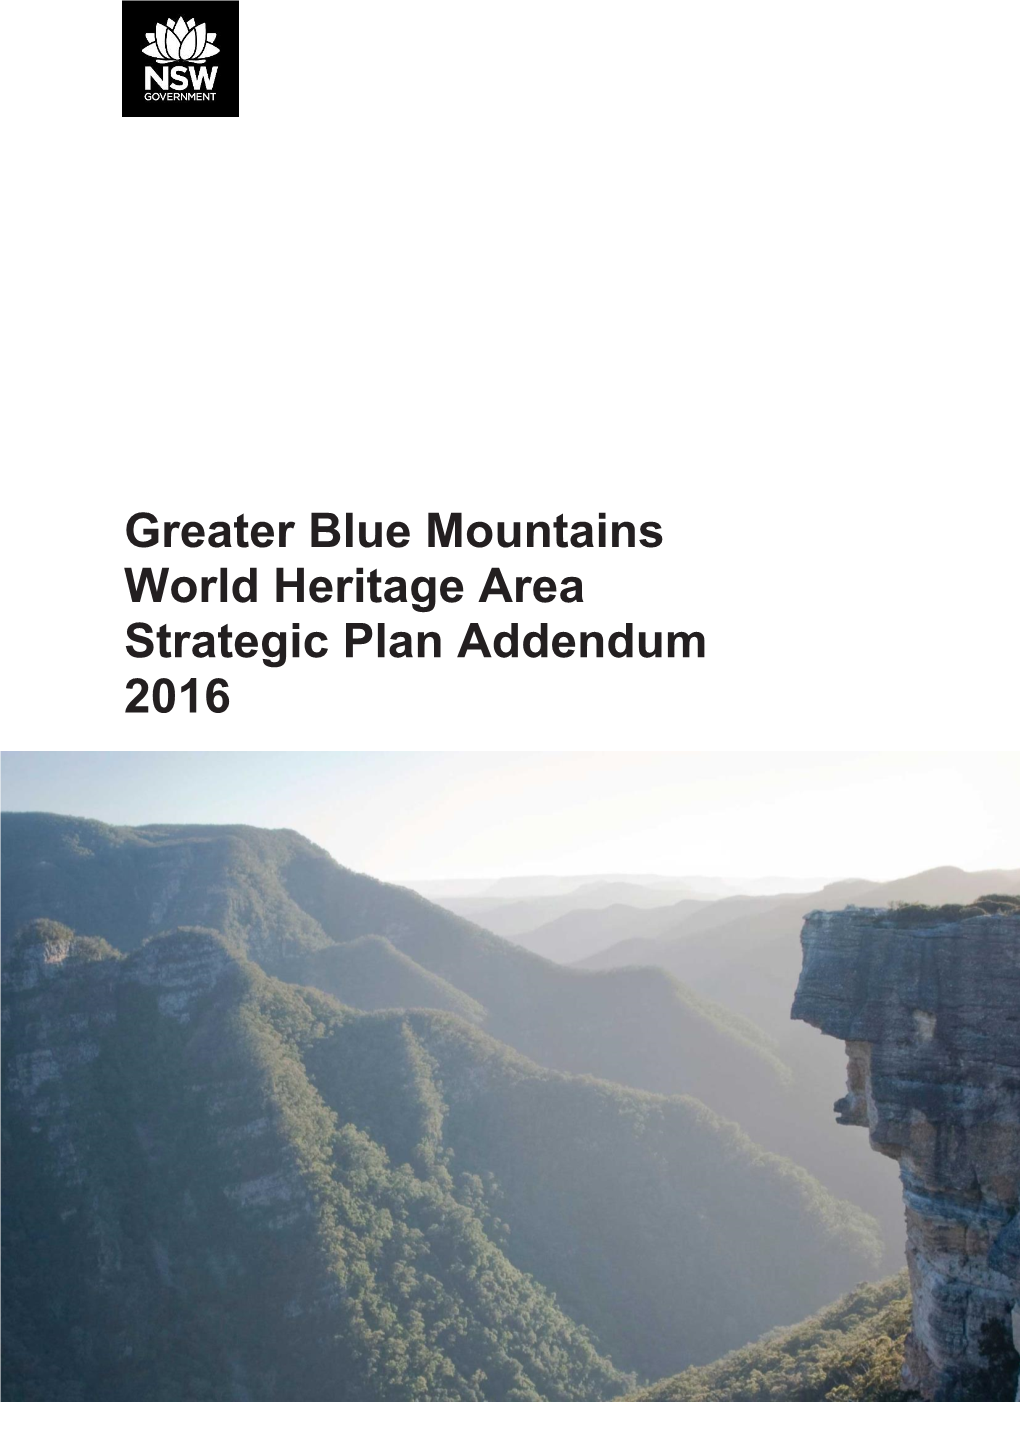 Greater Blue Mountains World Heritage Area Strategic Plan Addendum 2016